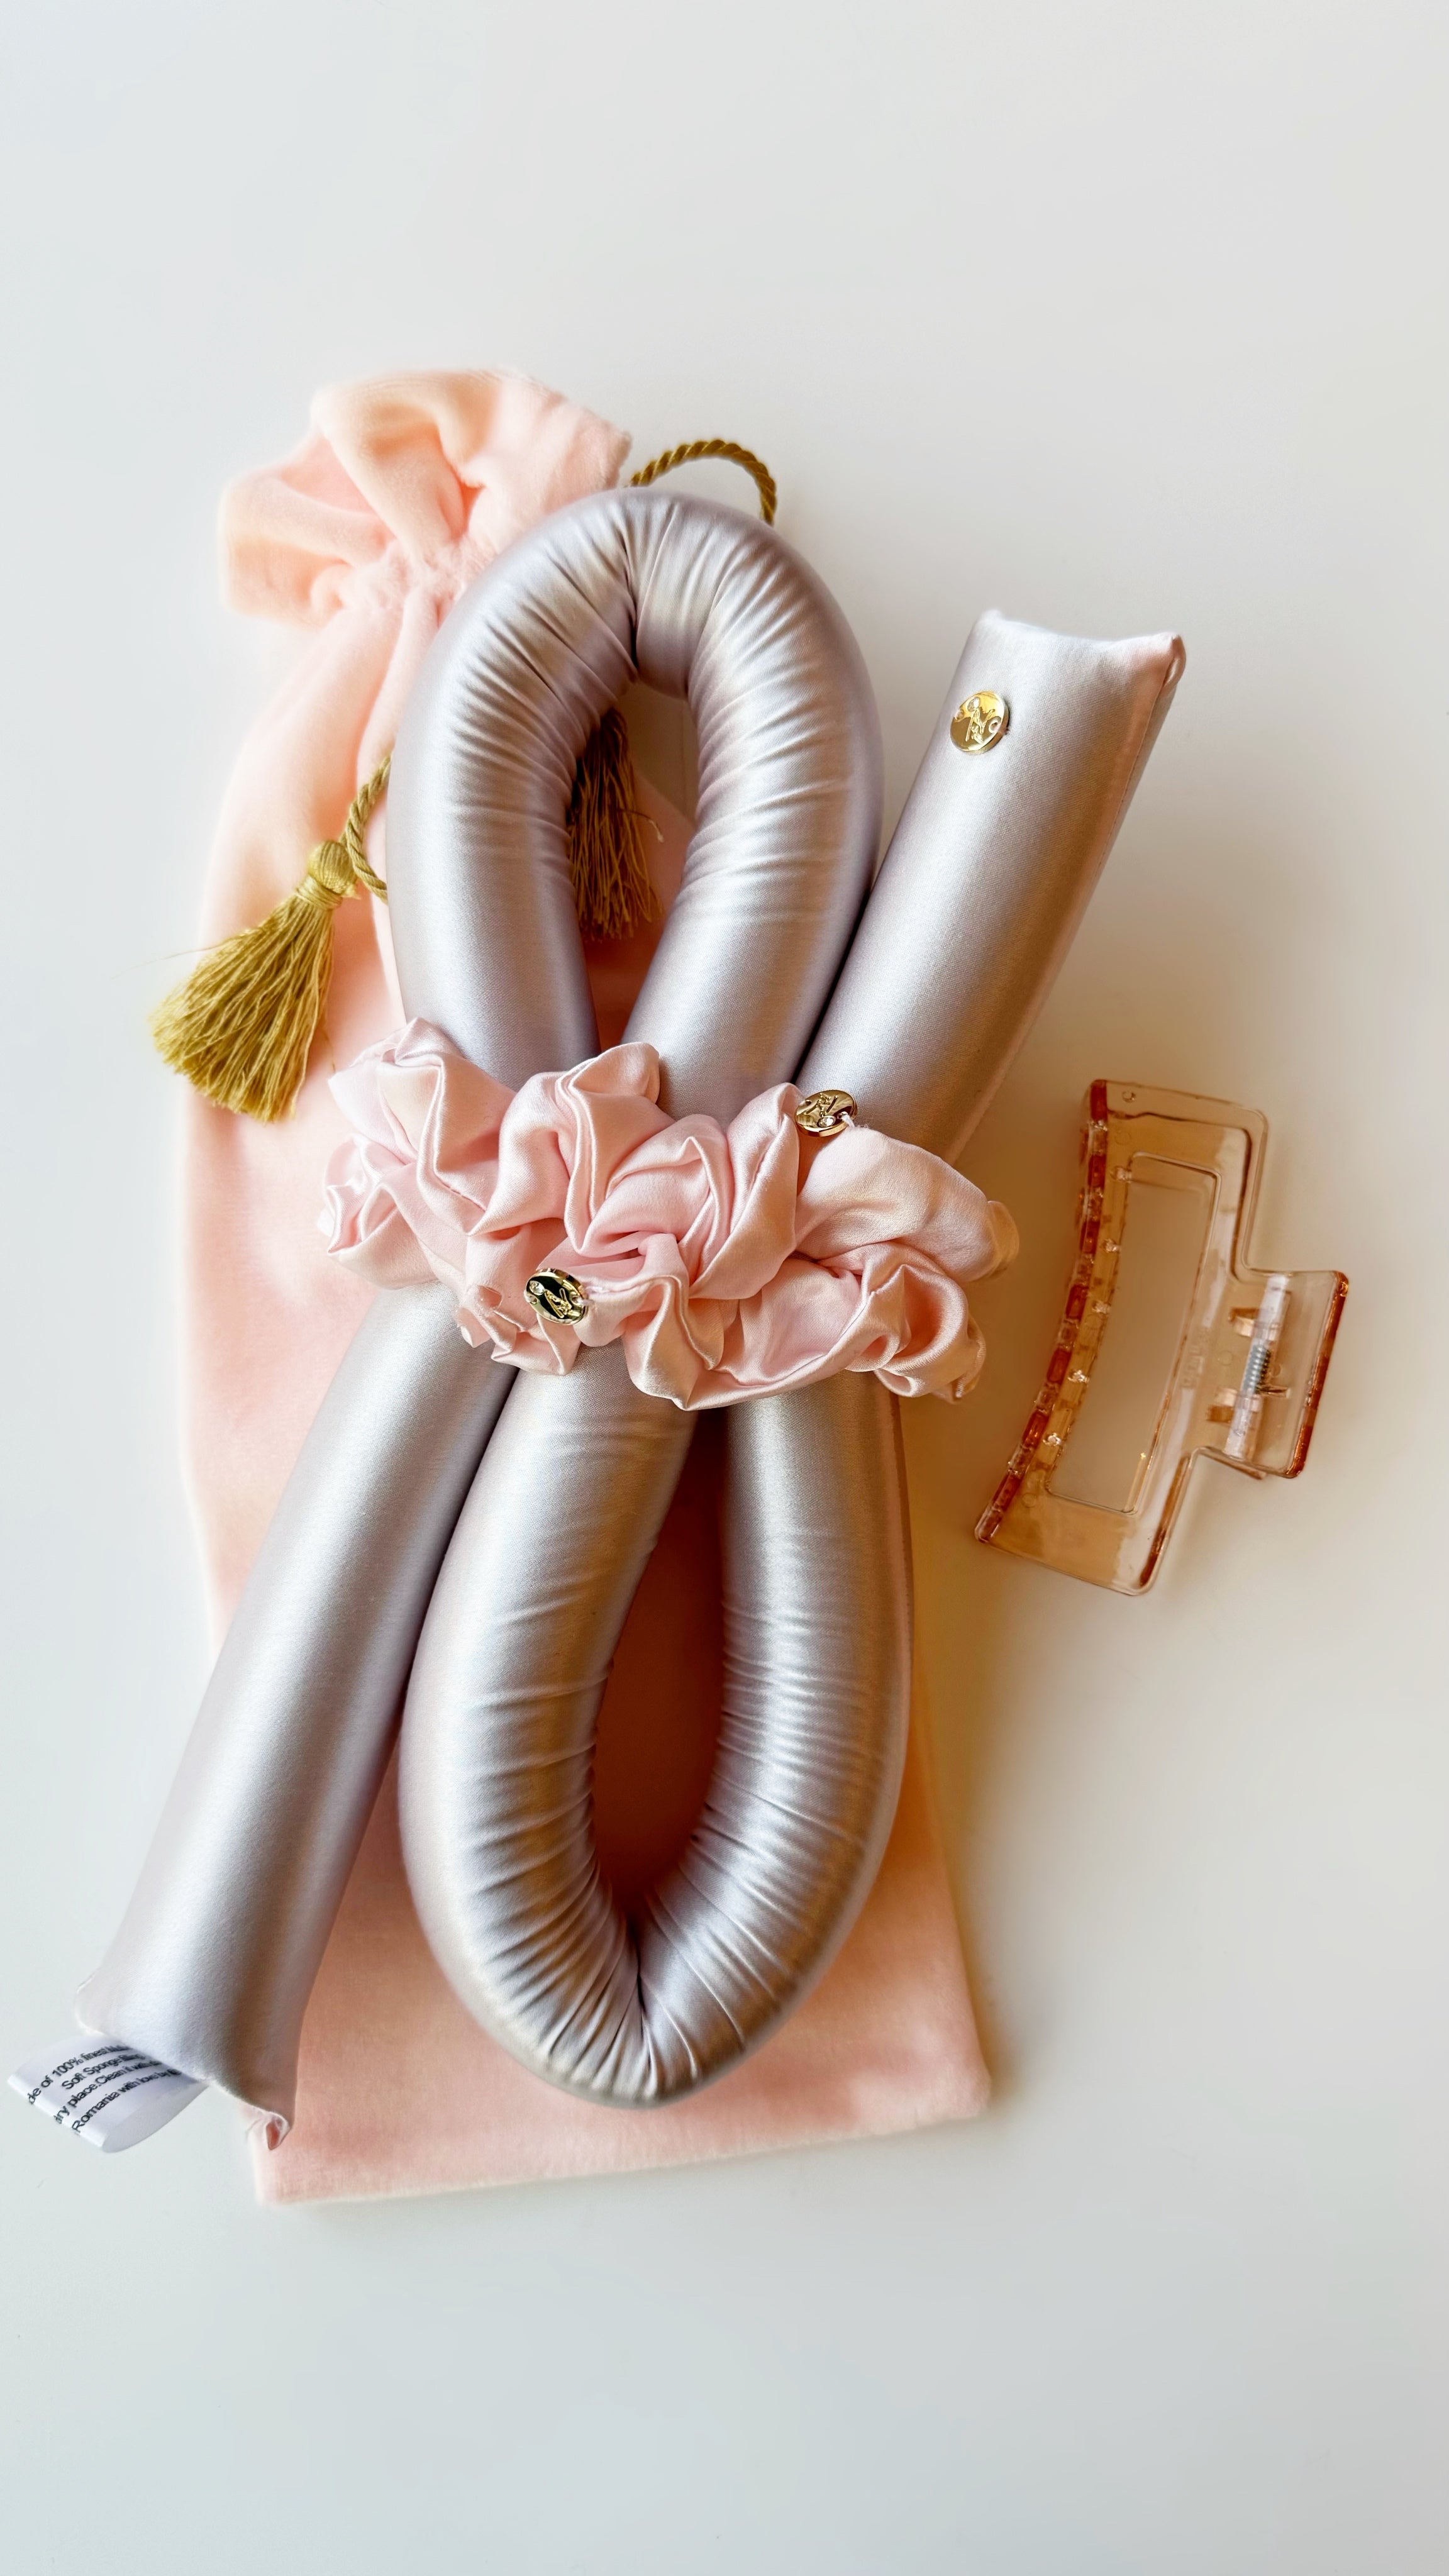 XXL BLOWOUT curling iron without Heat, Light Pink Natural Silk elastics